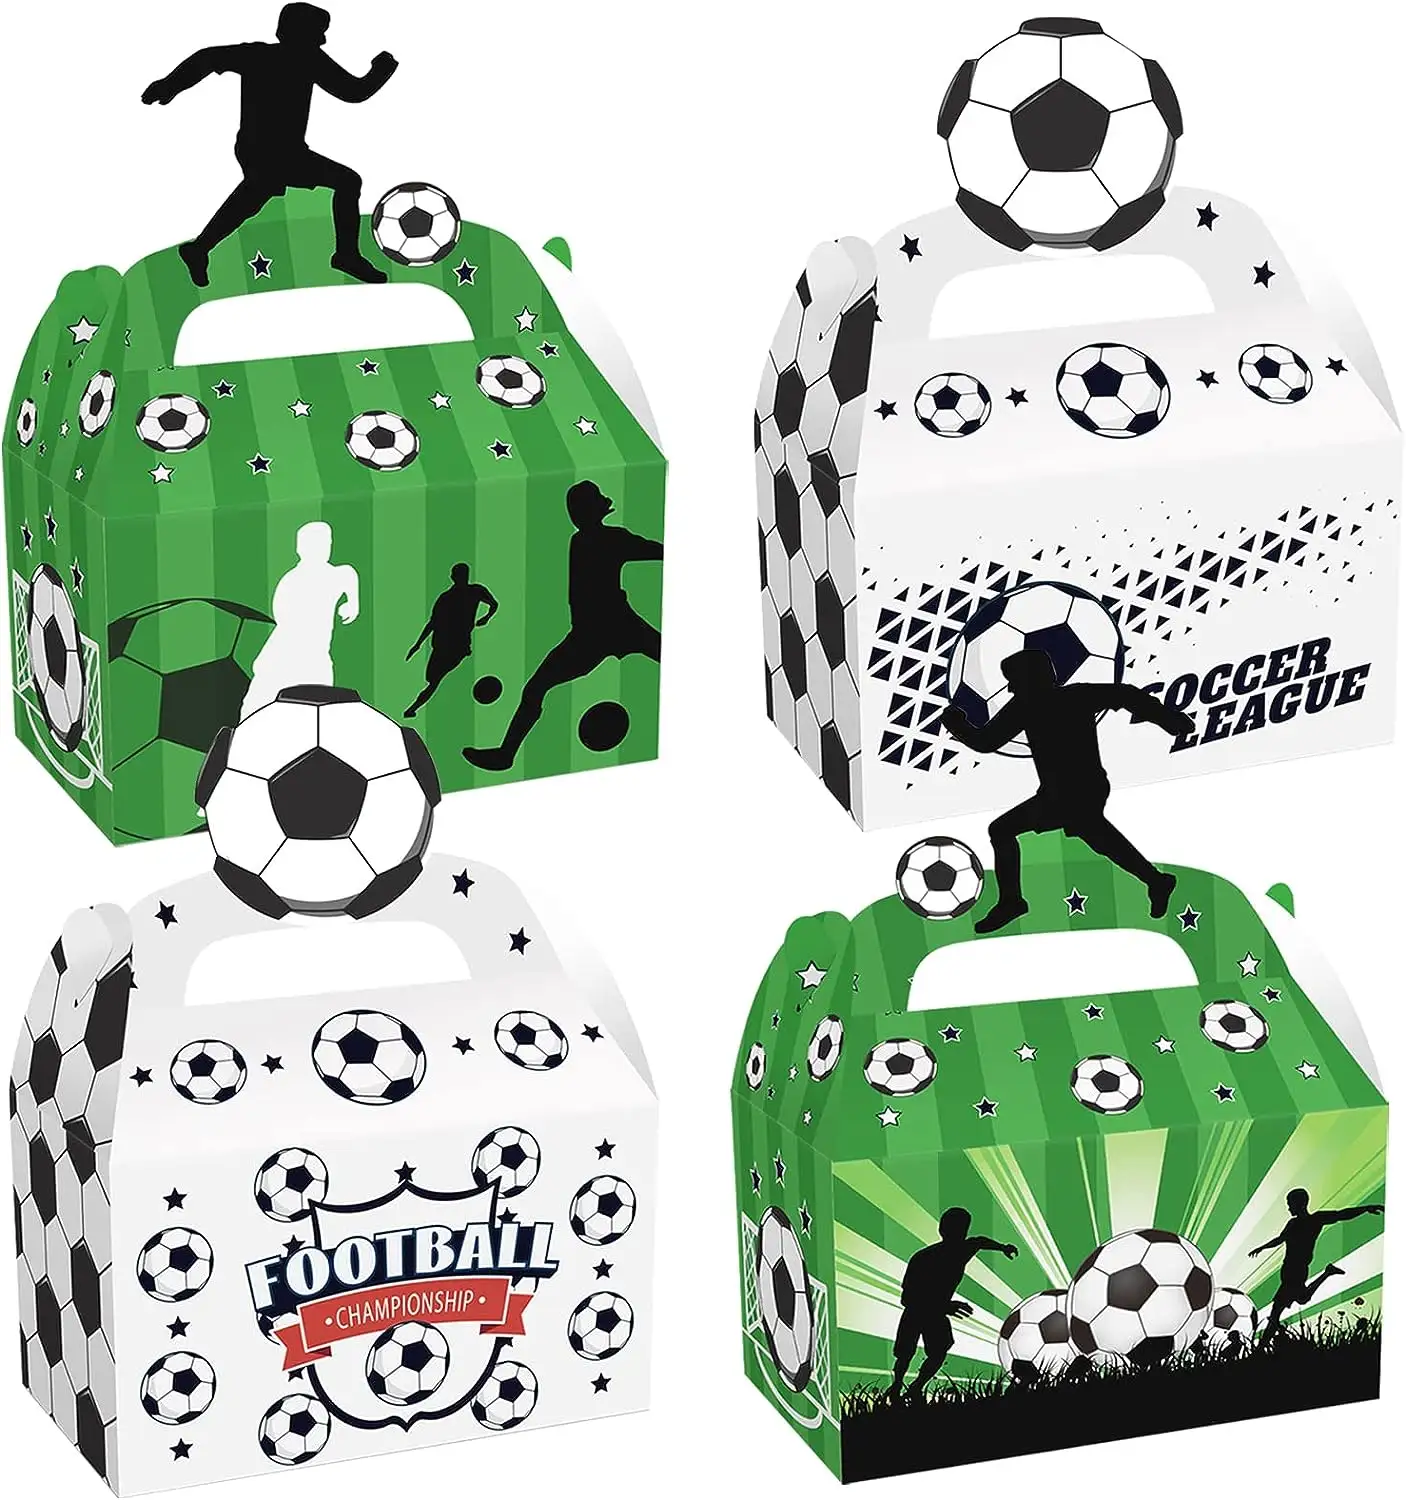 12 Pack Soccer Ball Party Favor Boxes Soccer Print Party Candy Treat Boxes Recycled Party Favor Boxes for Sport Soccer Theme